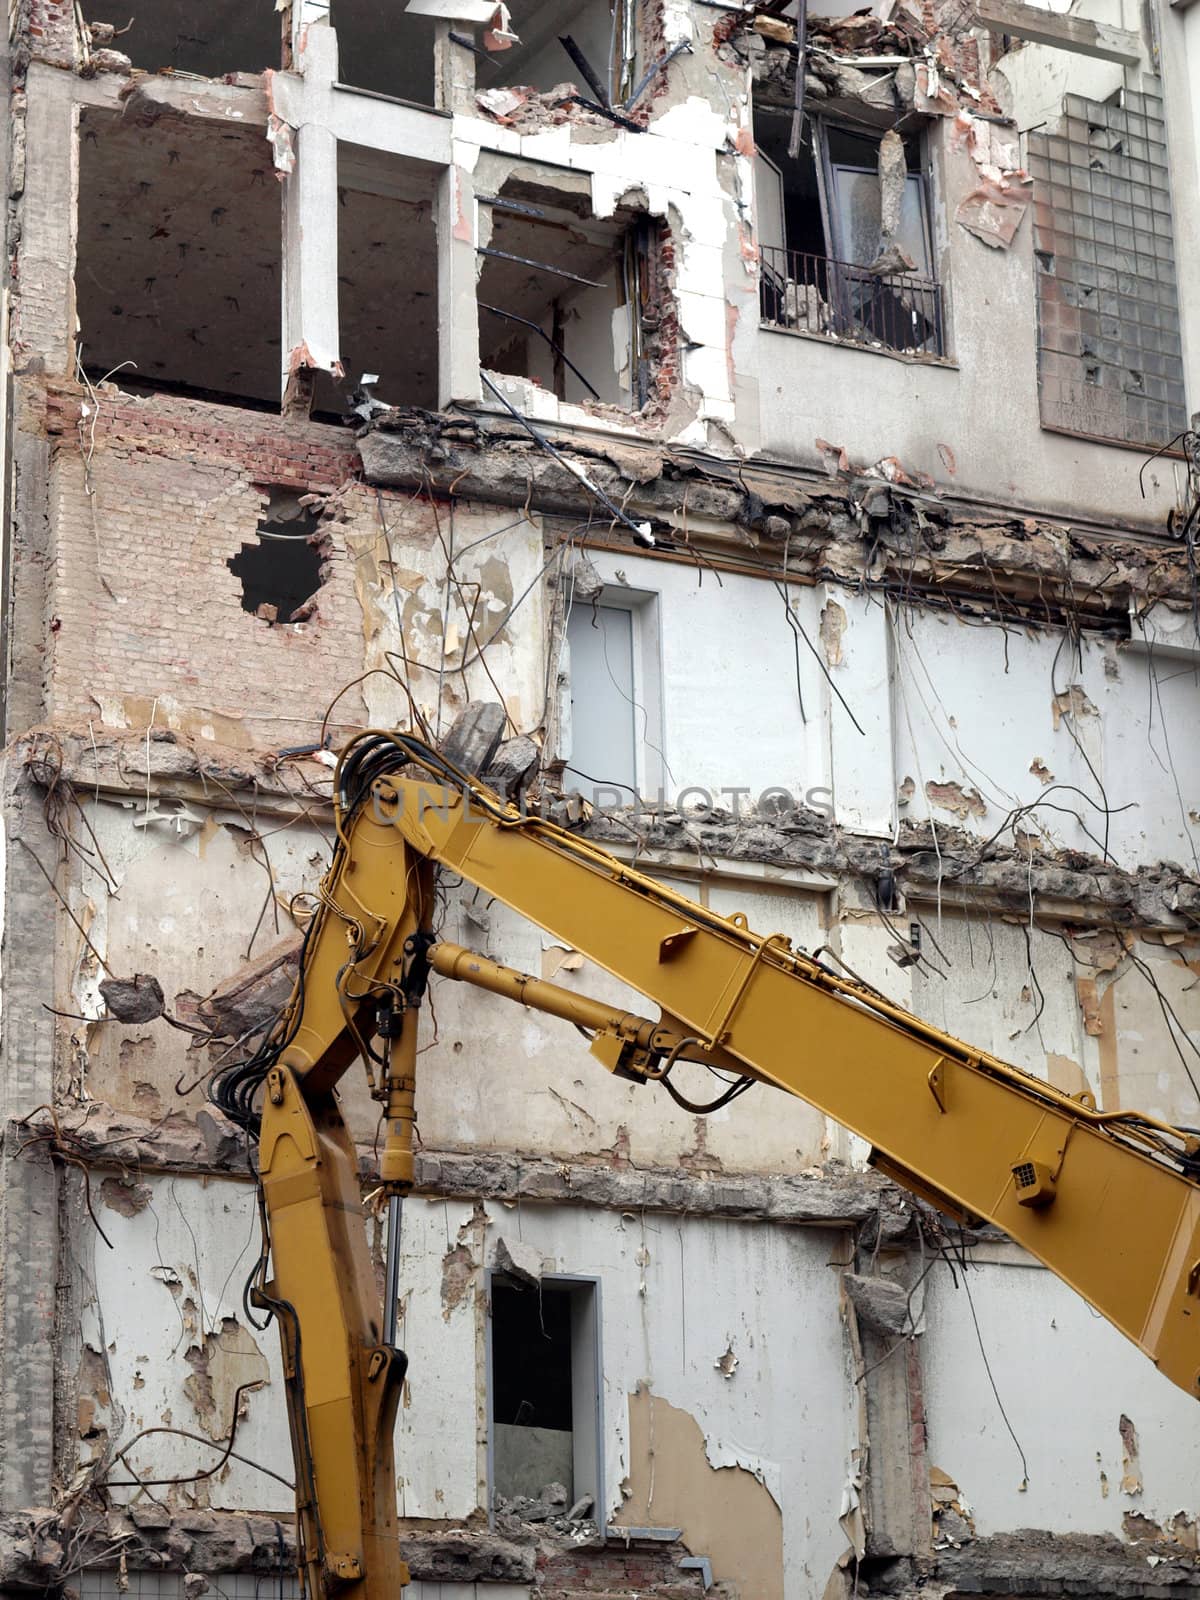 House debris following blast bombing and demolition